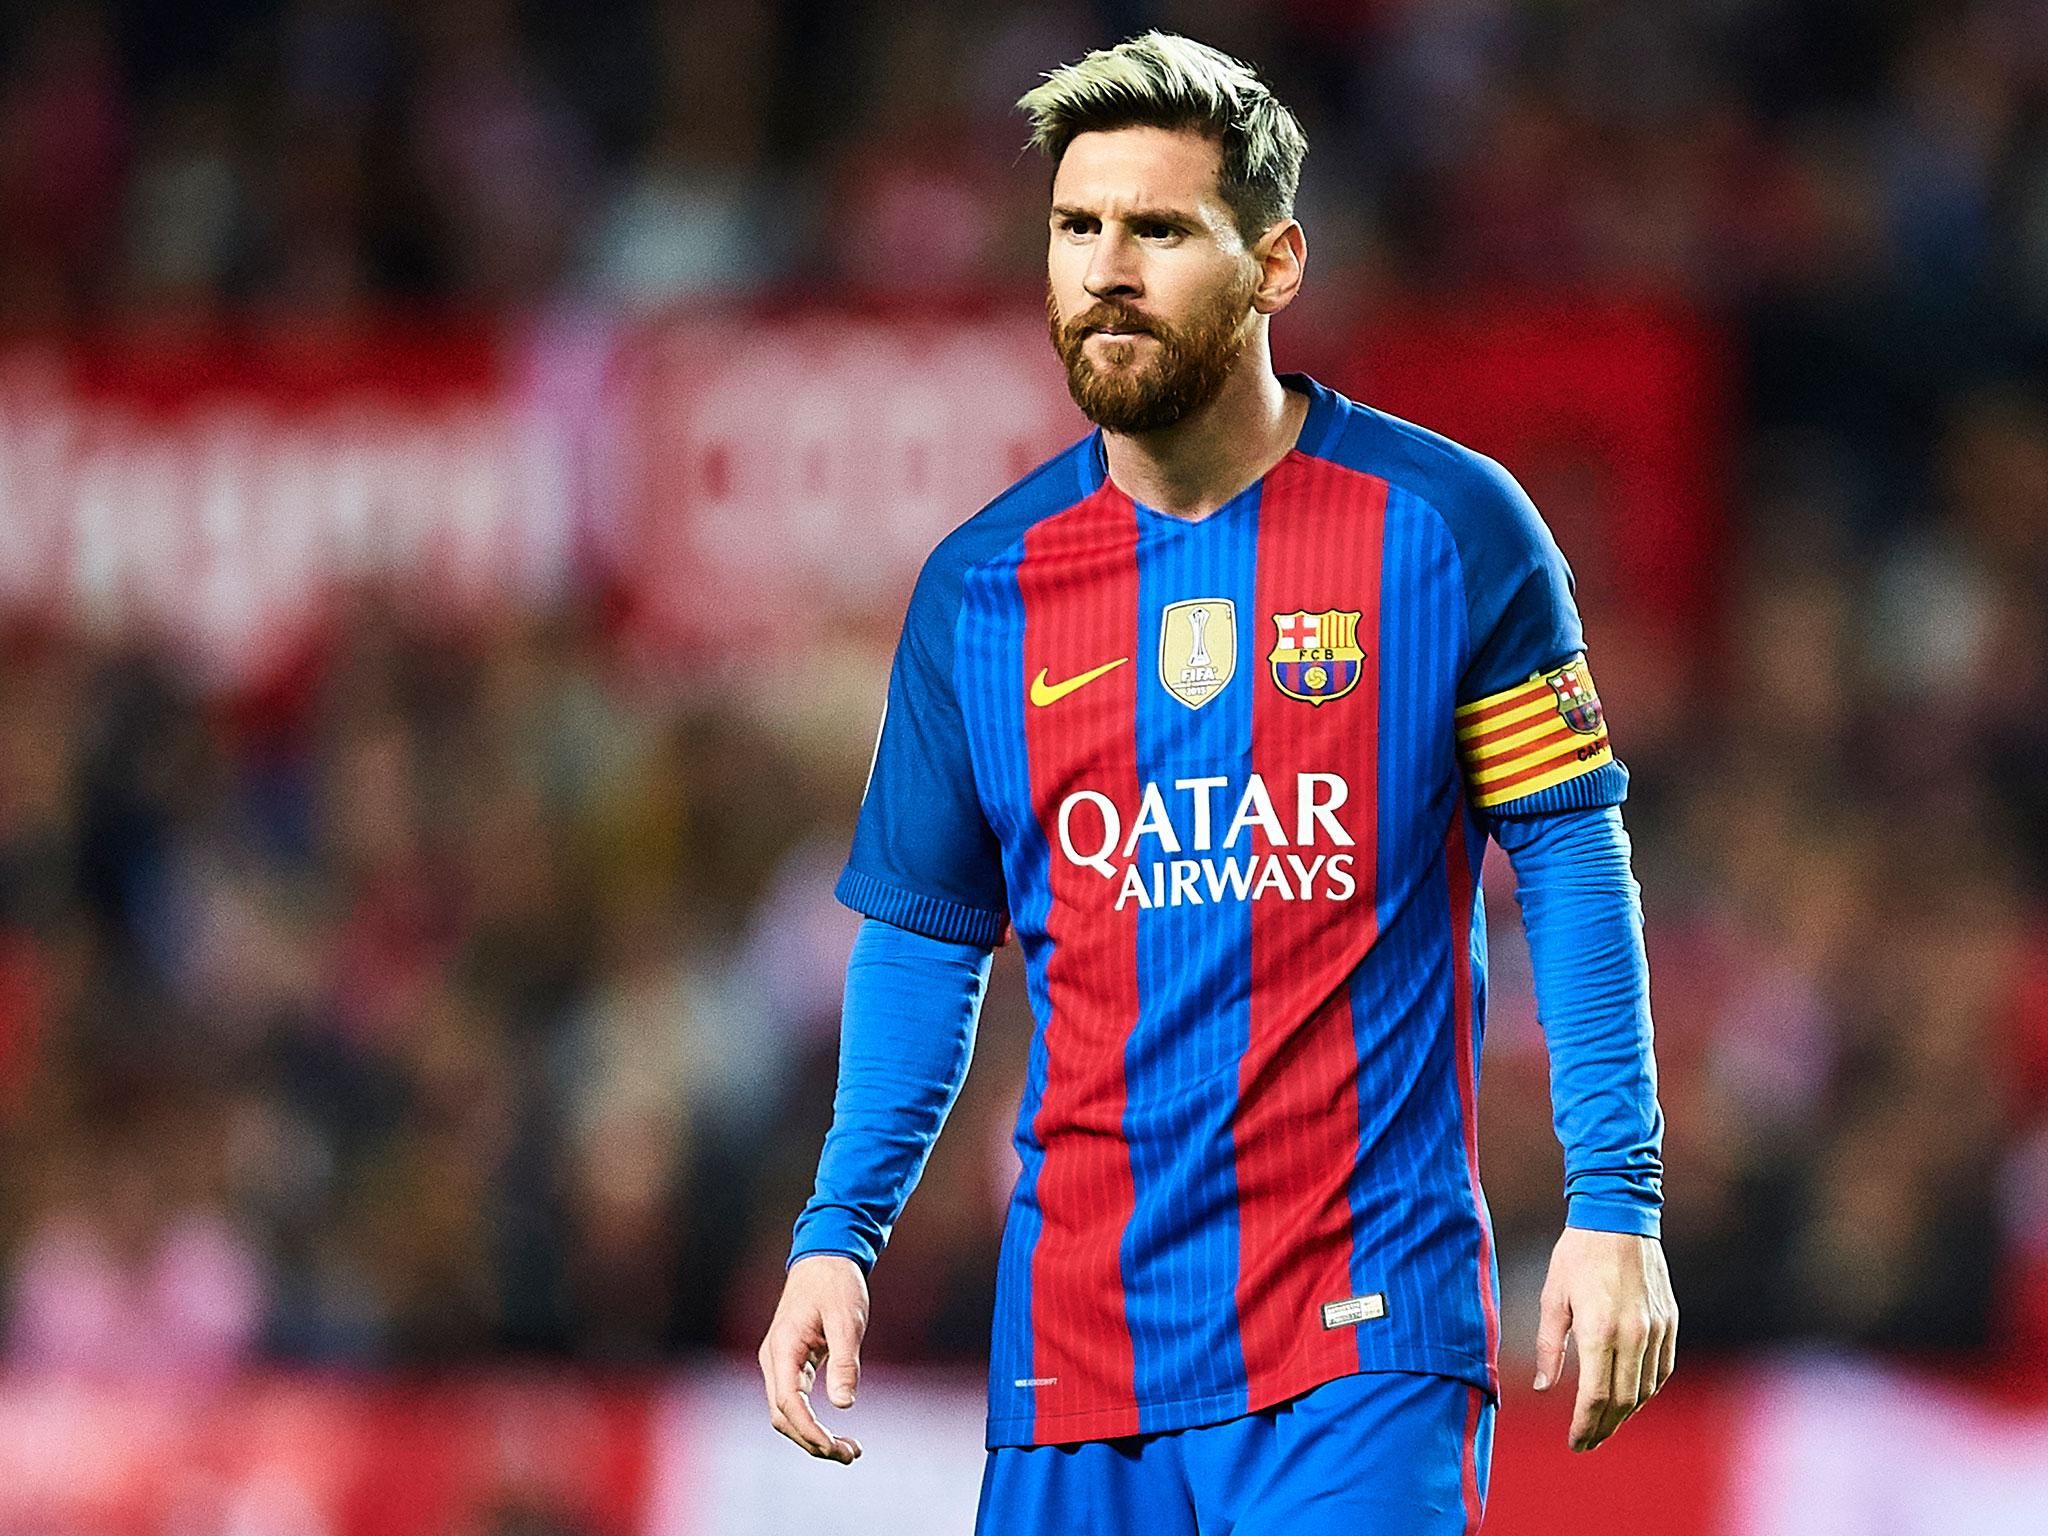 Lionel Messi wallpaper, Sports, HQ Lionel Messi pictureK Wallpaper 2019